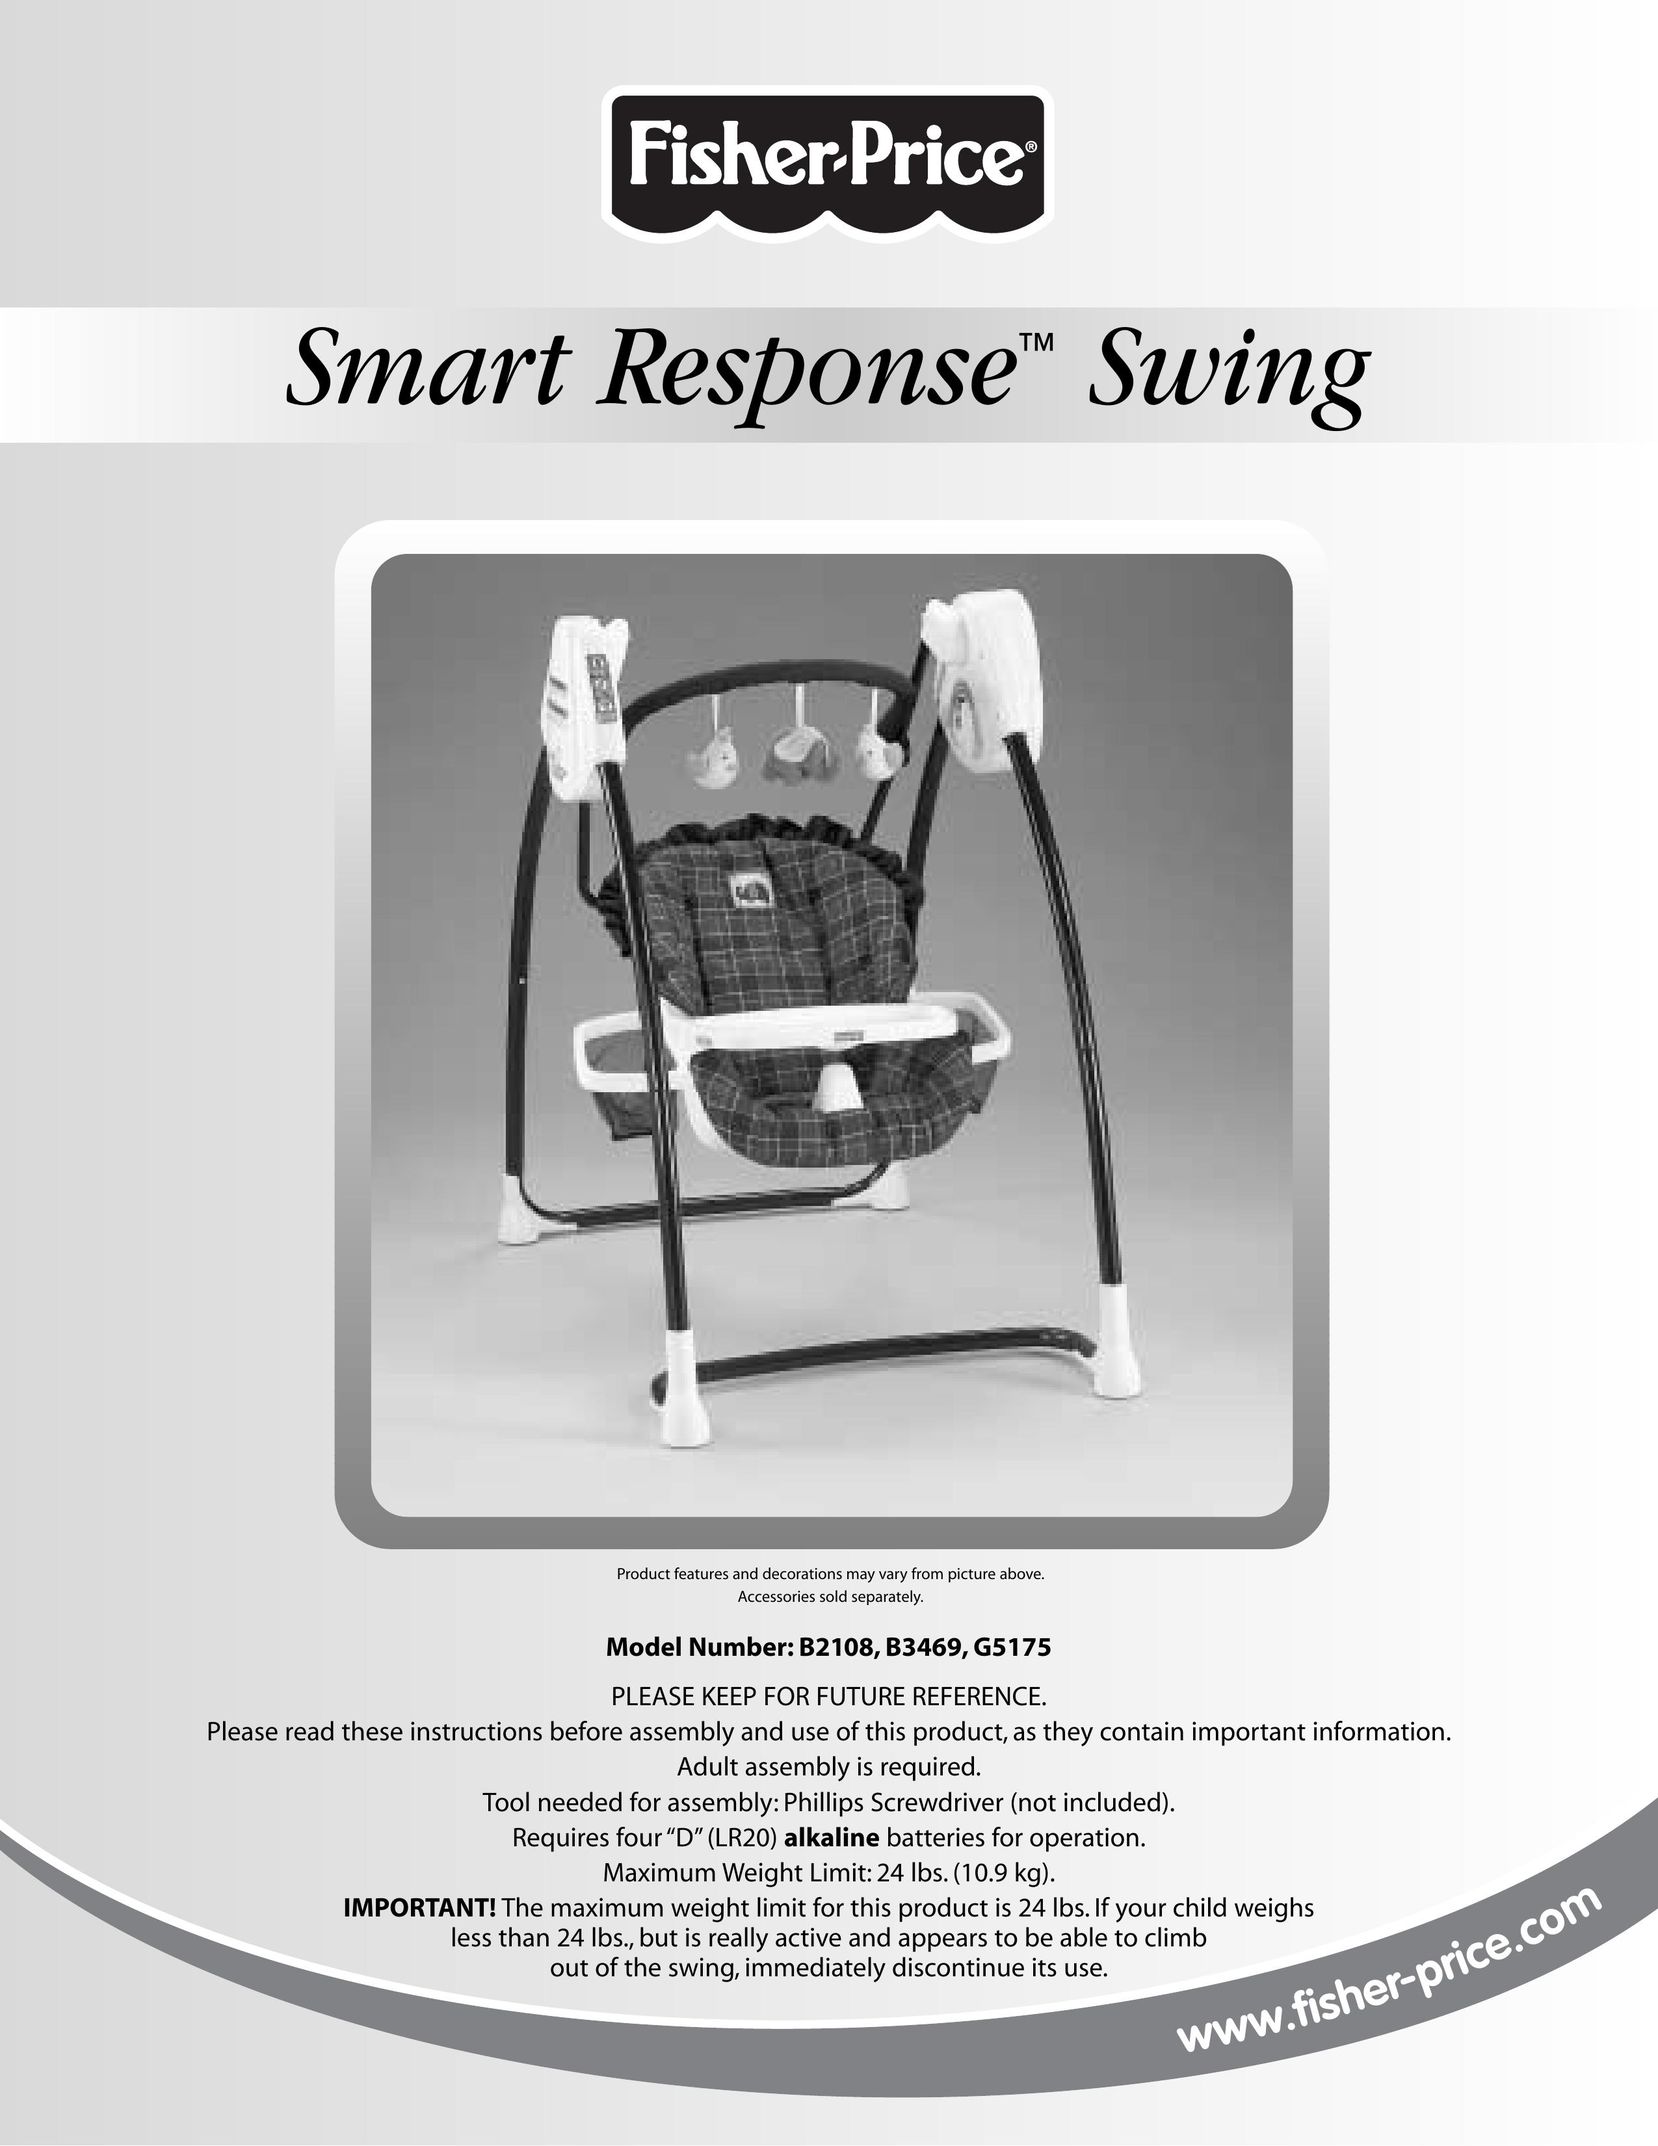 Fisher-Price B2108 Baby Swing User Manual